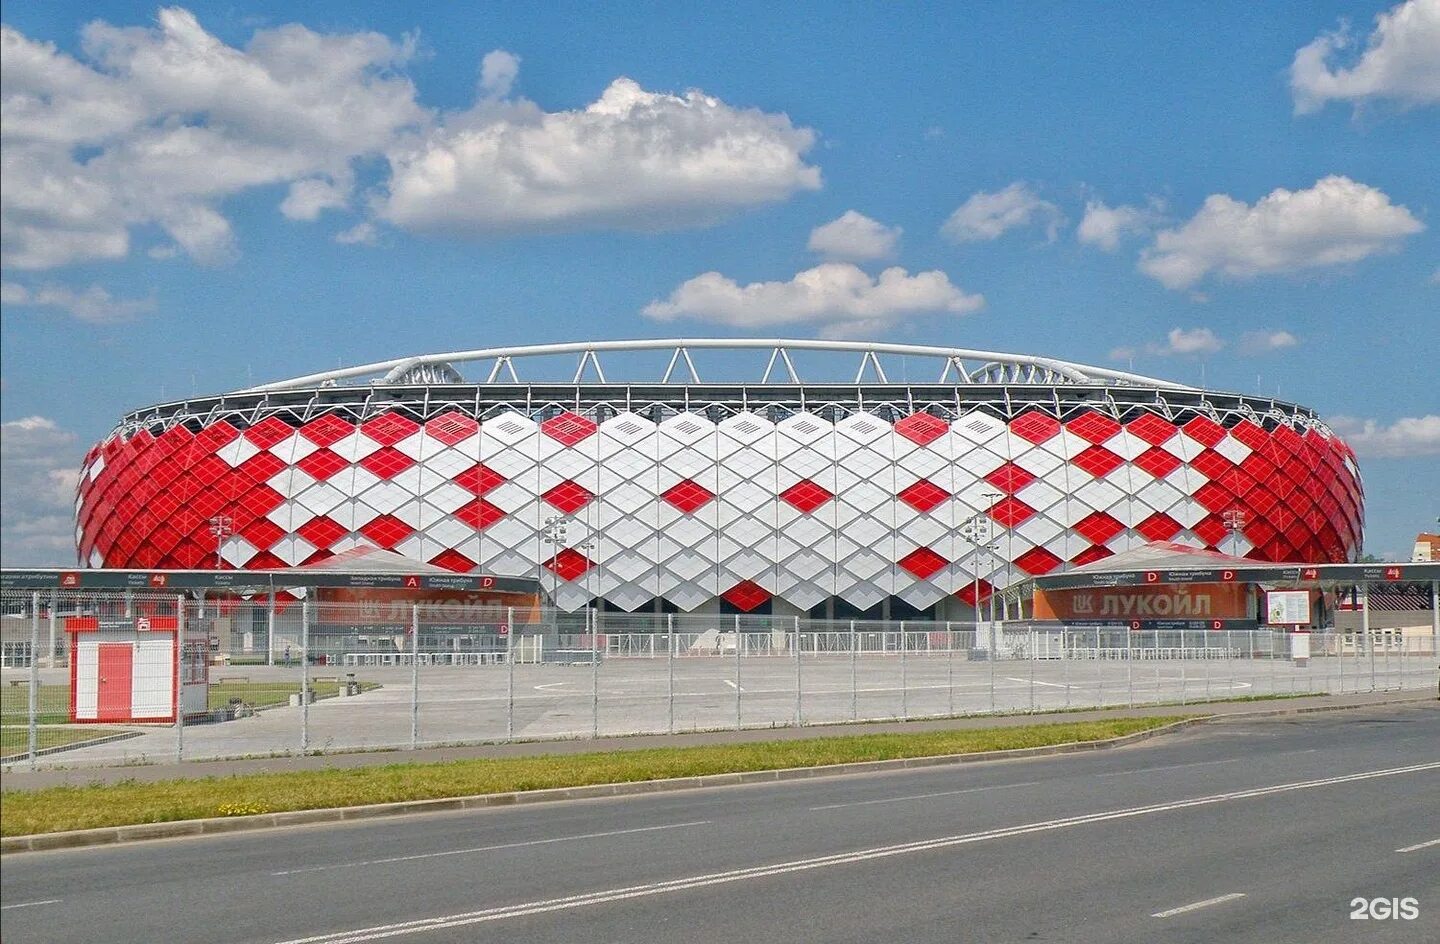 Стадион лукойл москва. Волоколамское шоссе 69 стадион открытие Арена. Волоколамское шоссе 69 стадион открытие.